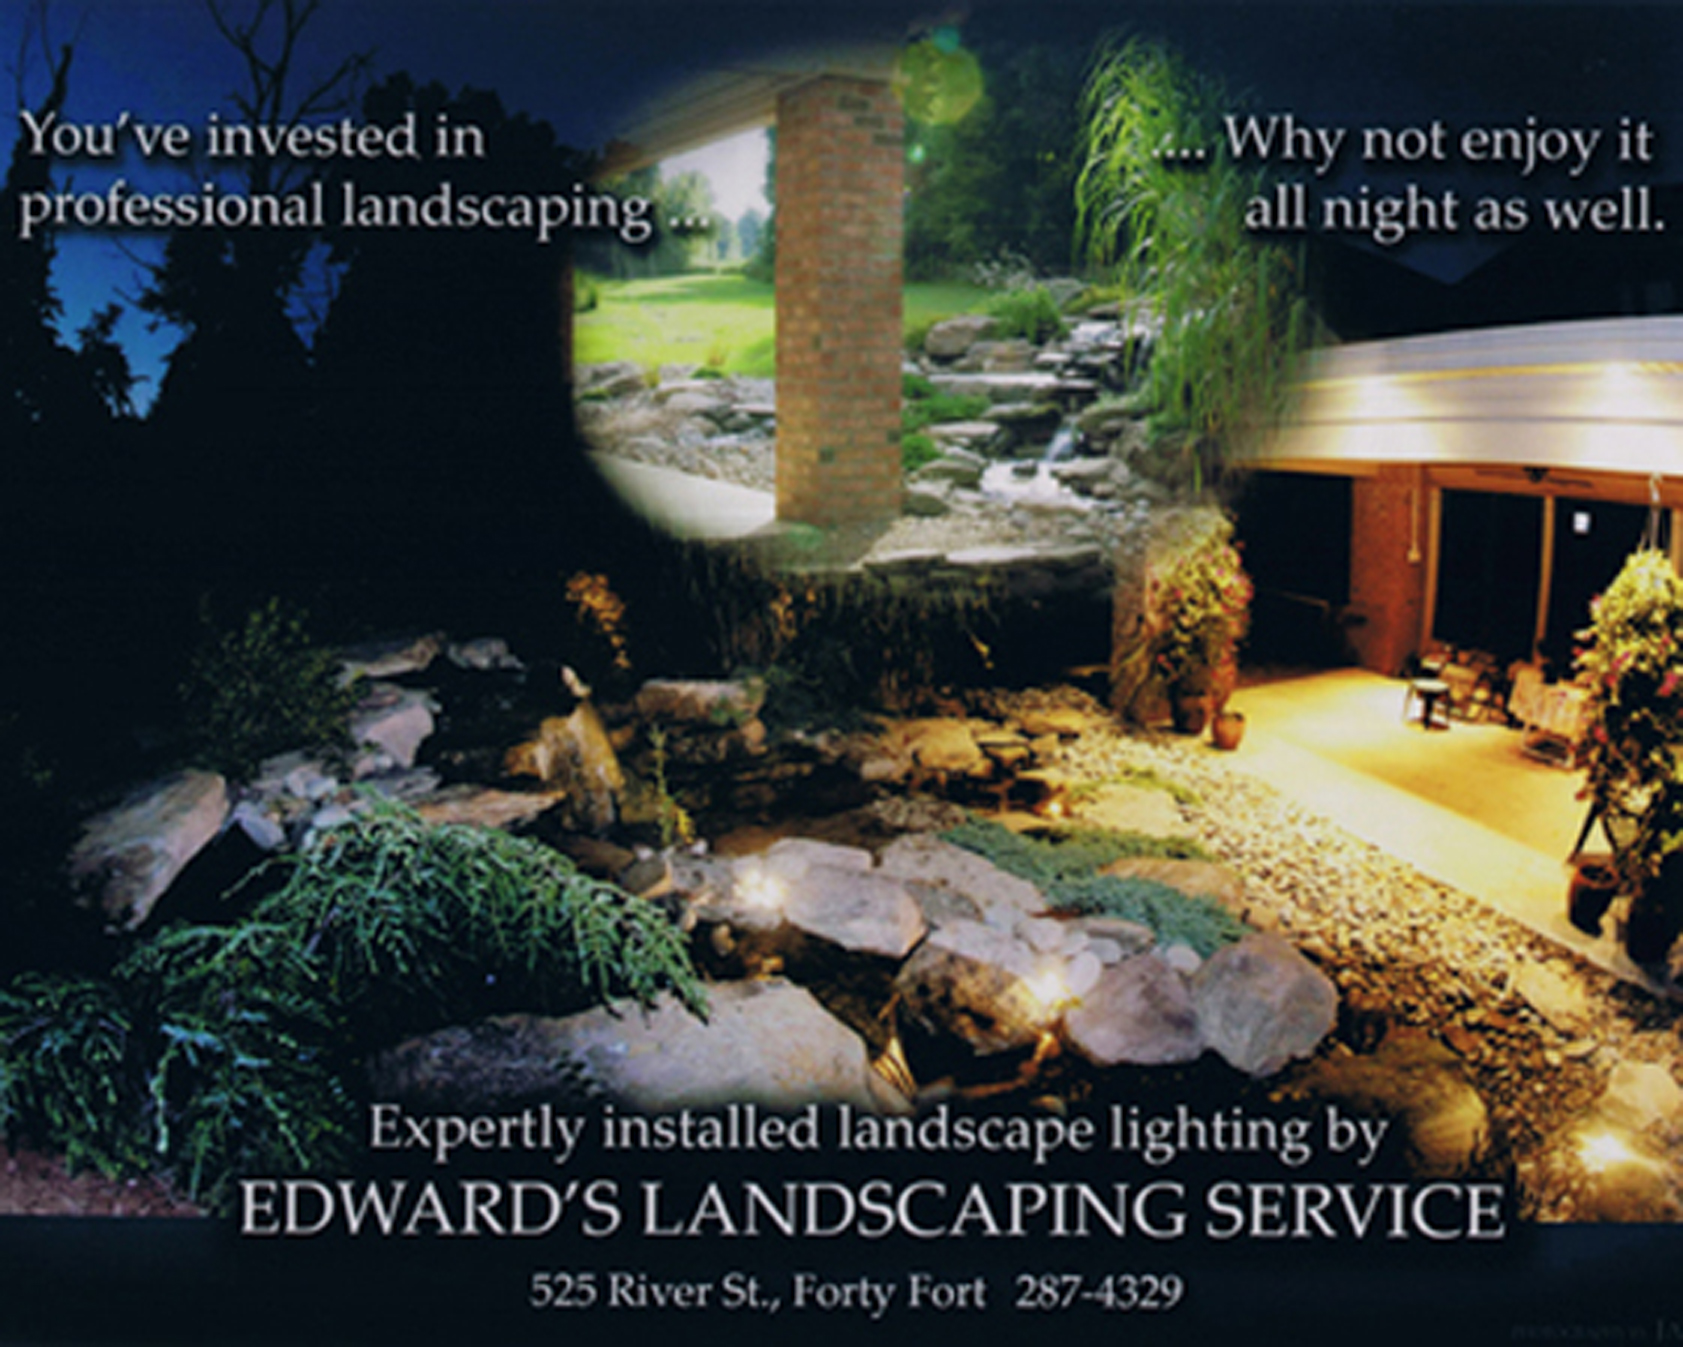 Edward's Garden Center offering outdoor lighting install.